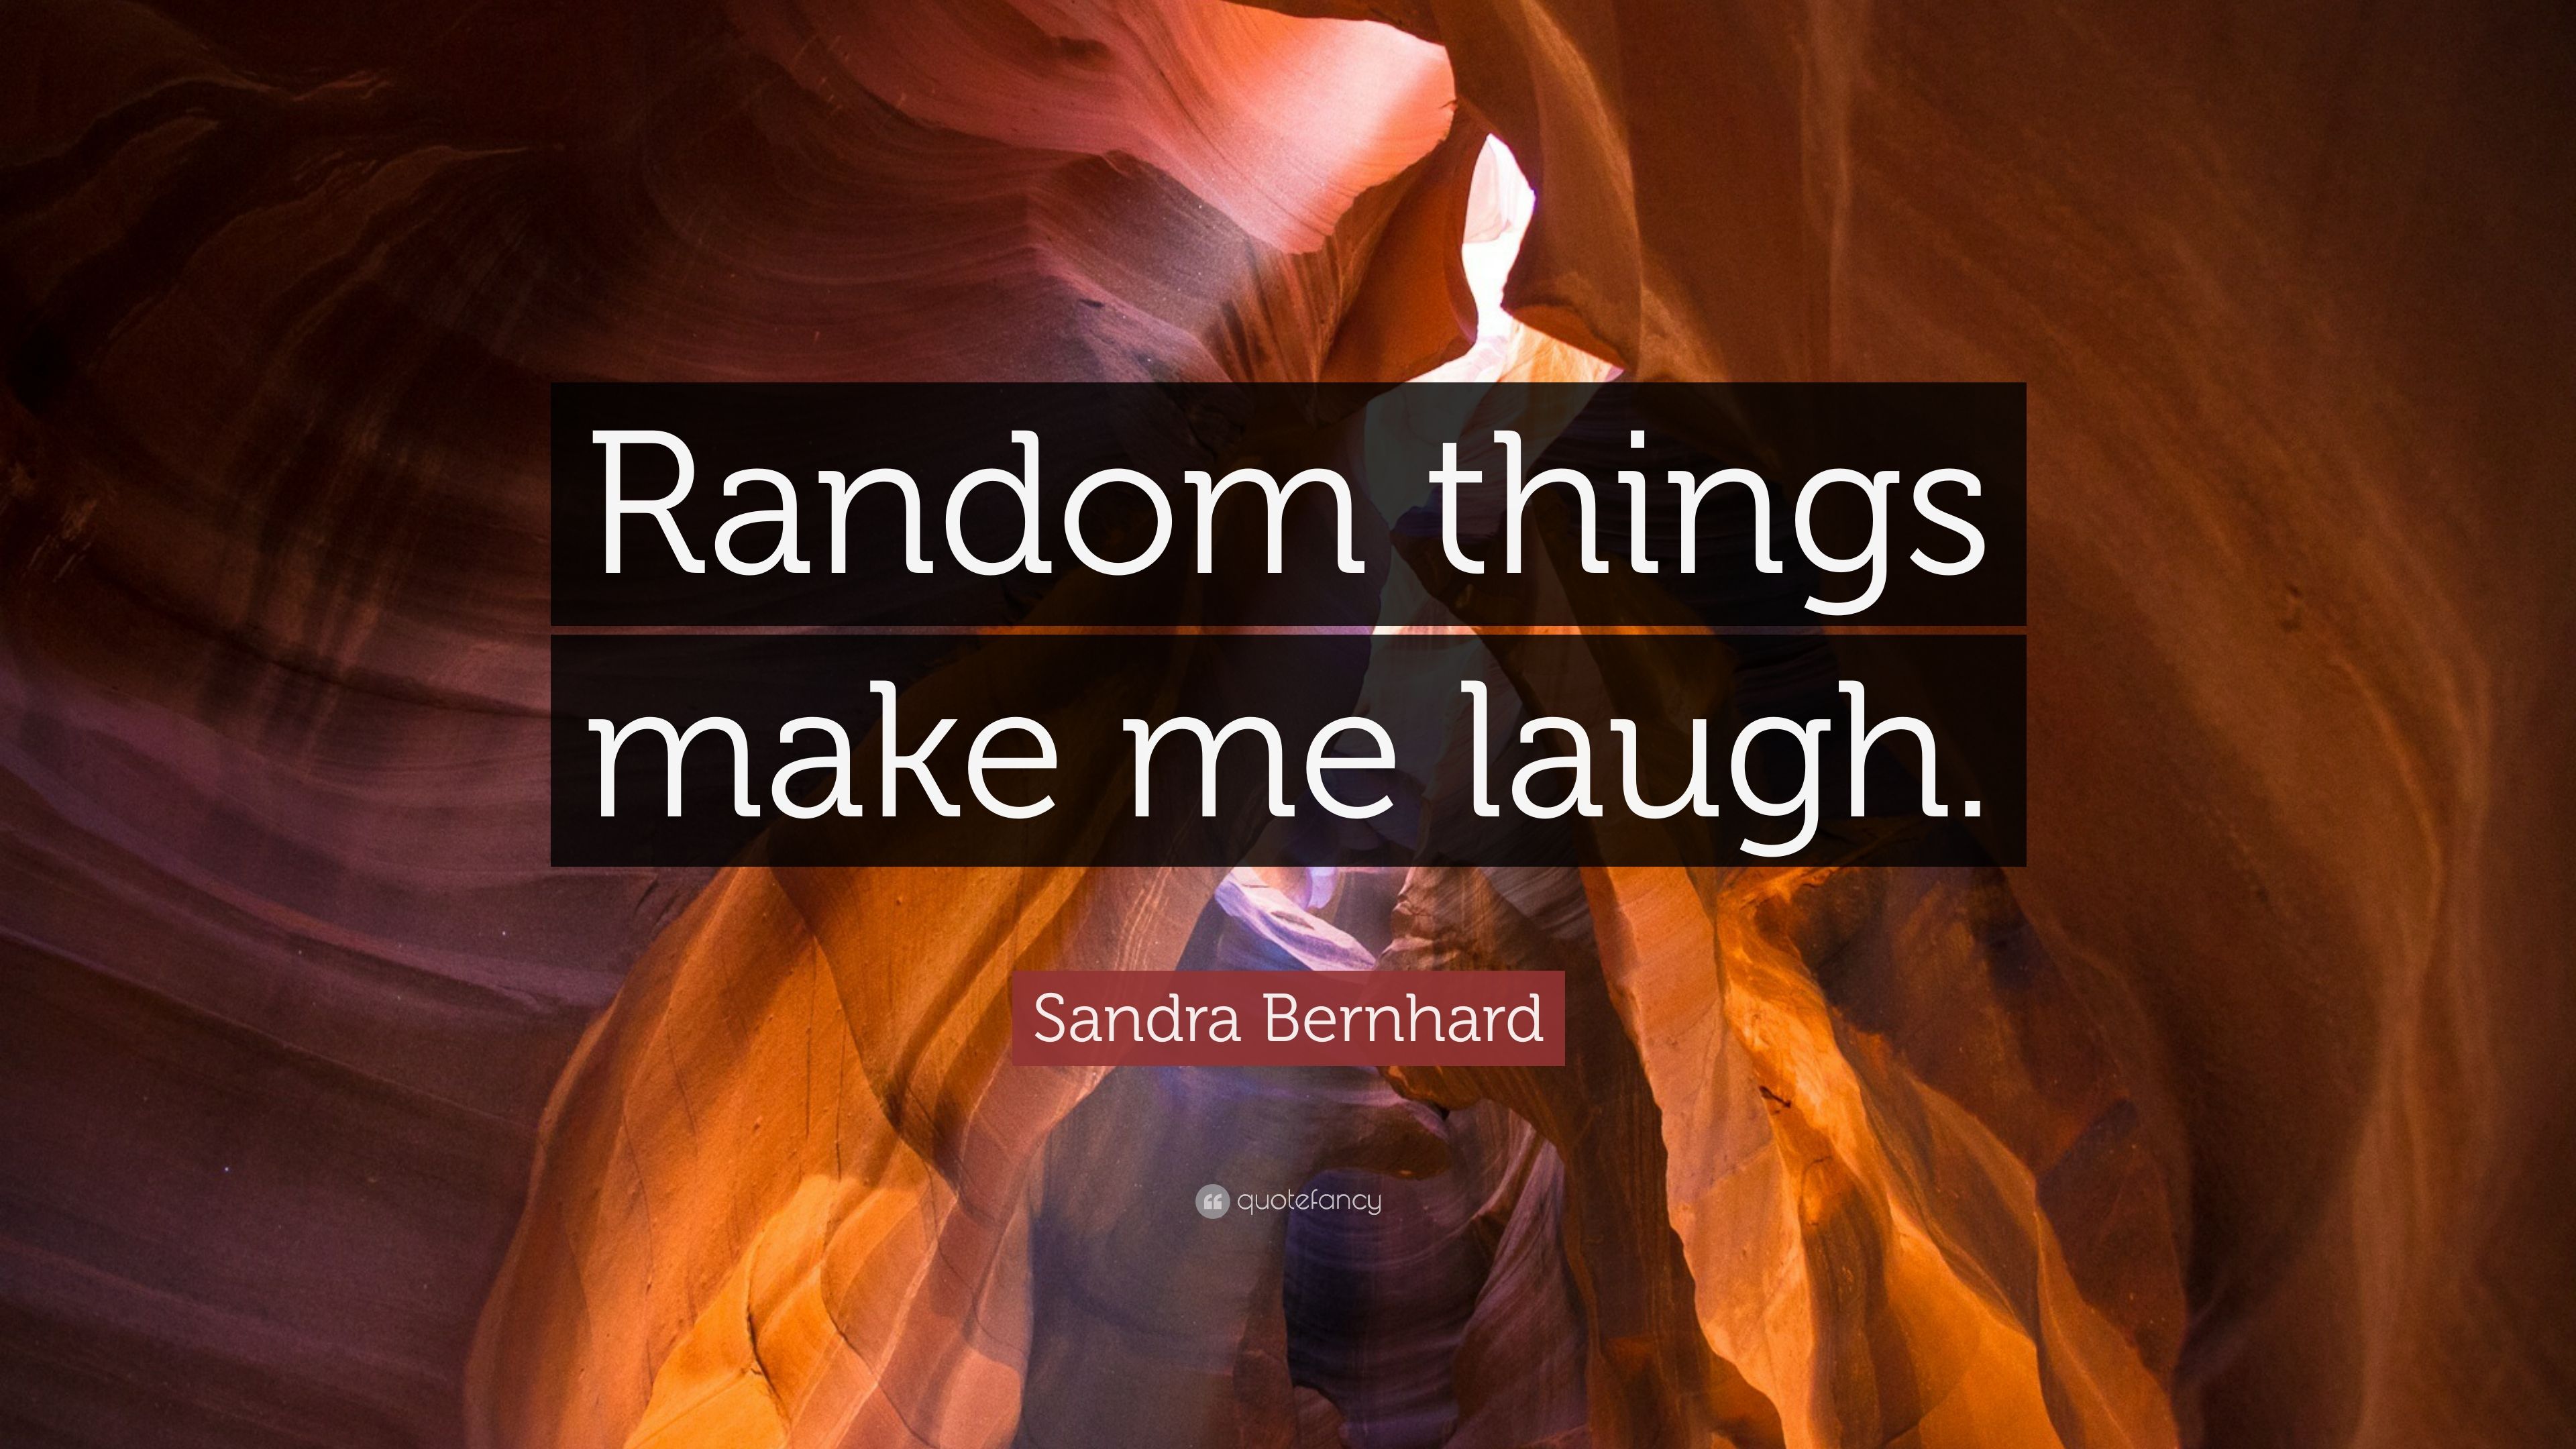 Sandra Bernhard Quote: “Random things make me laugh.” (7 wallpaper)